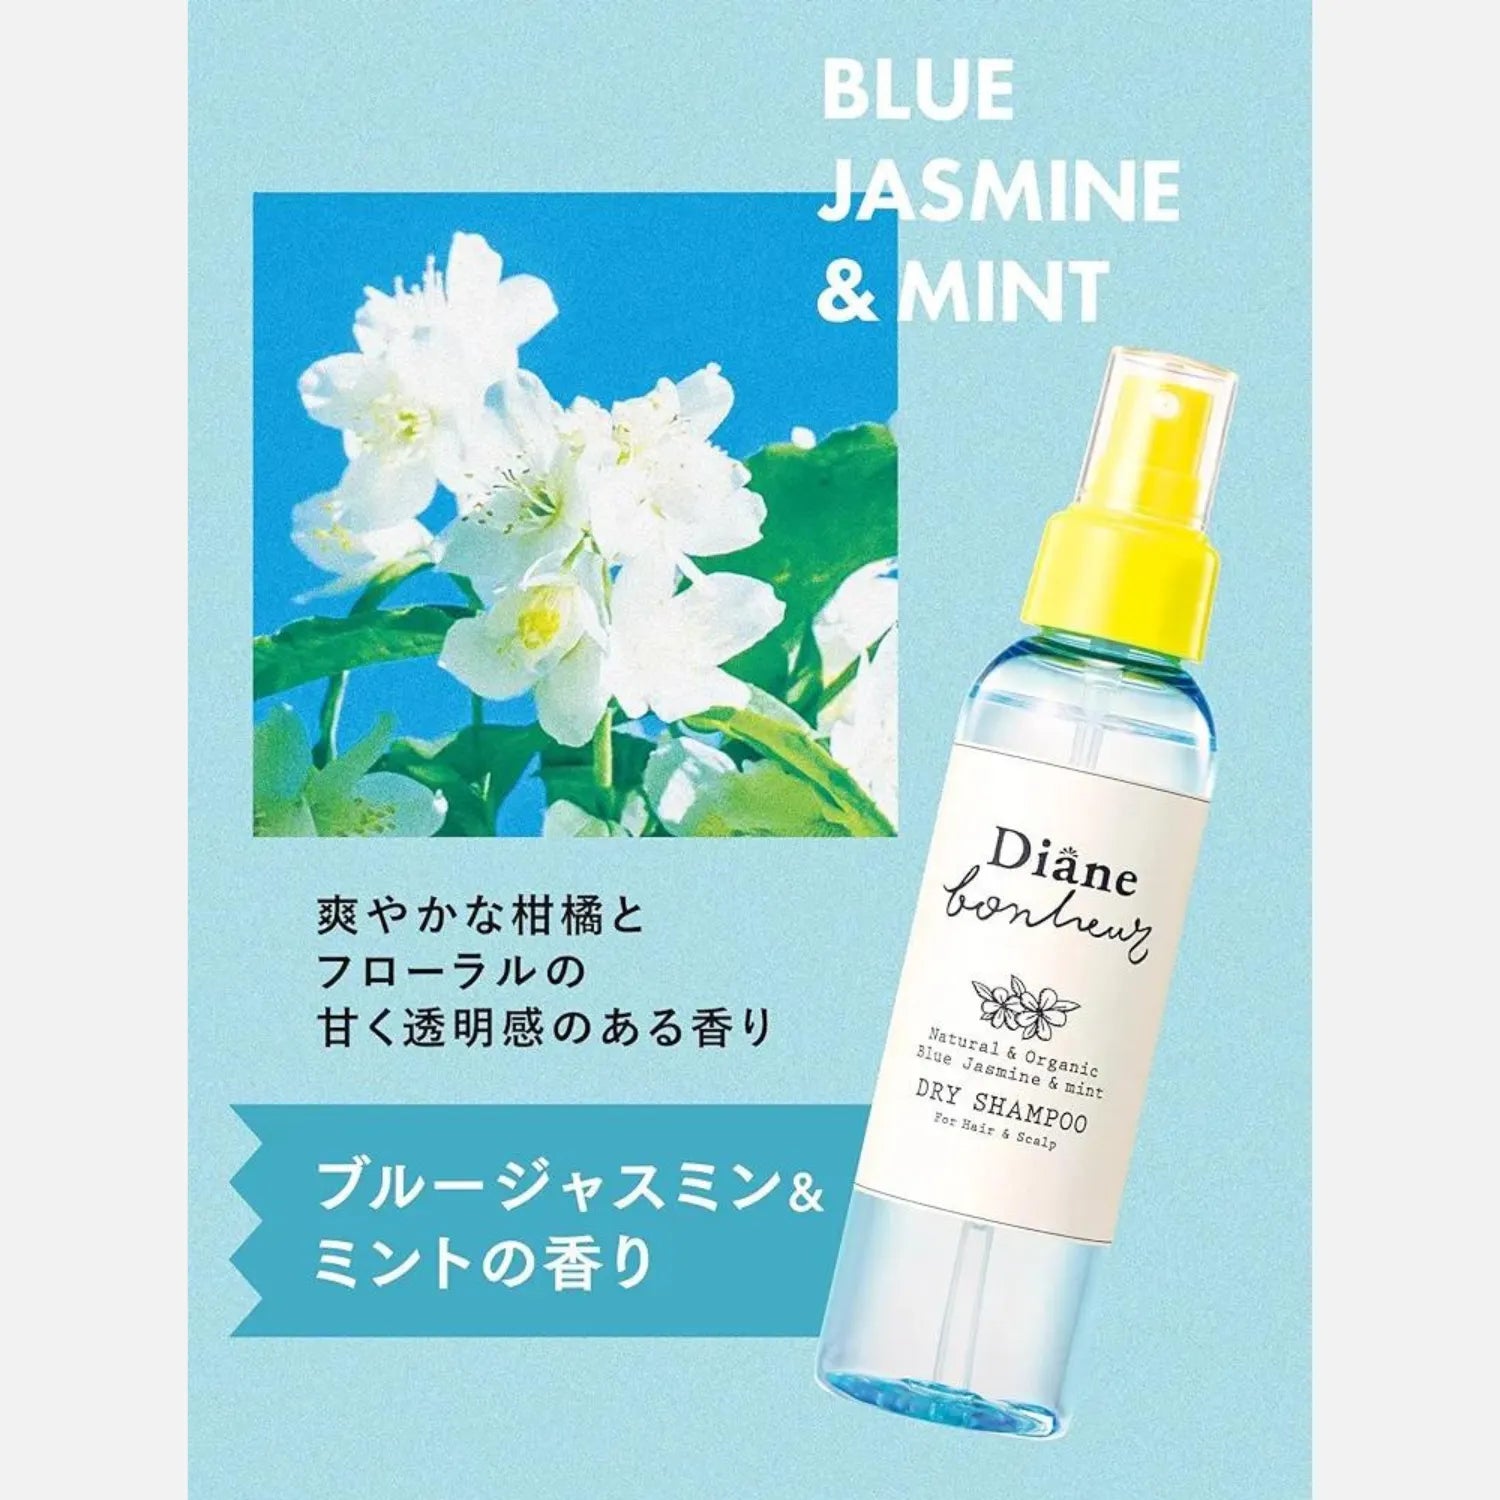 Diane Bonheur Organic Dry Shampoo Blue Jasmine & Mint 120ml